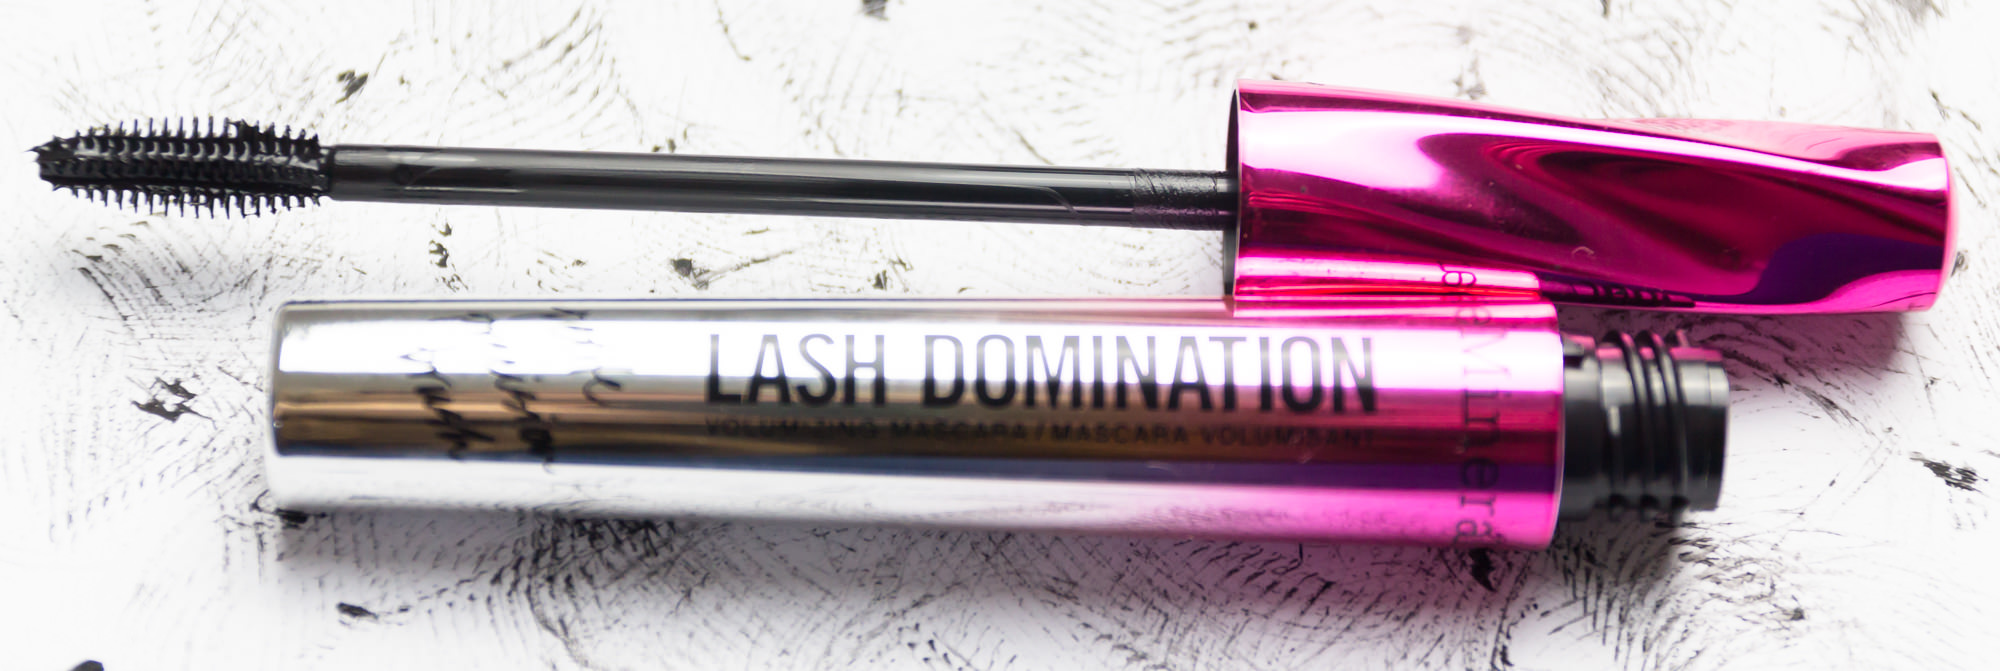 bareMinerals Lash Domination Volumizing Mascara Petite Precision Brush Review